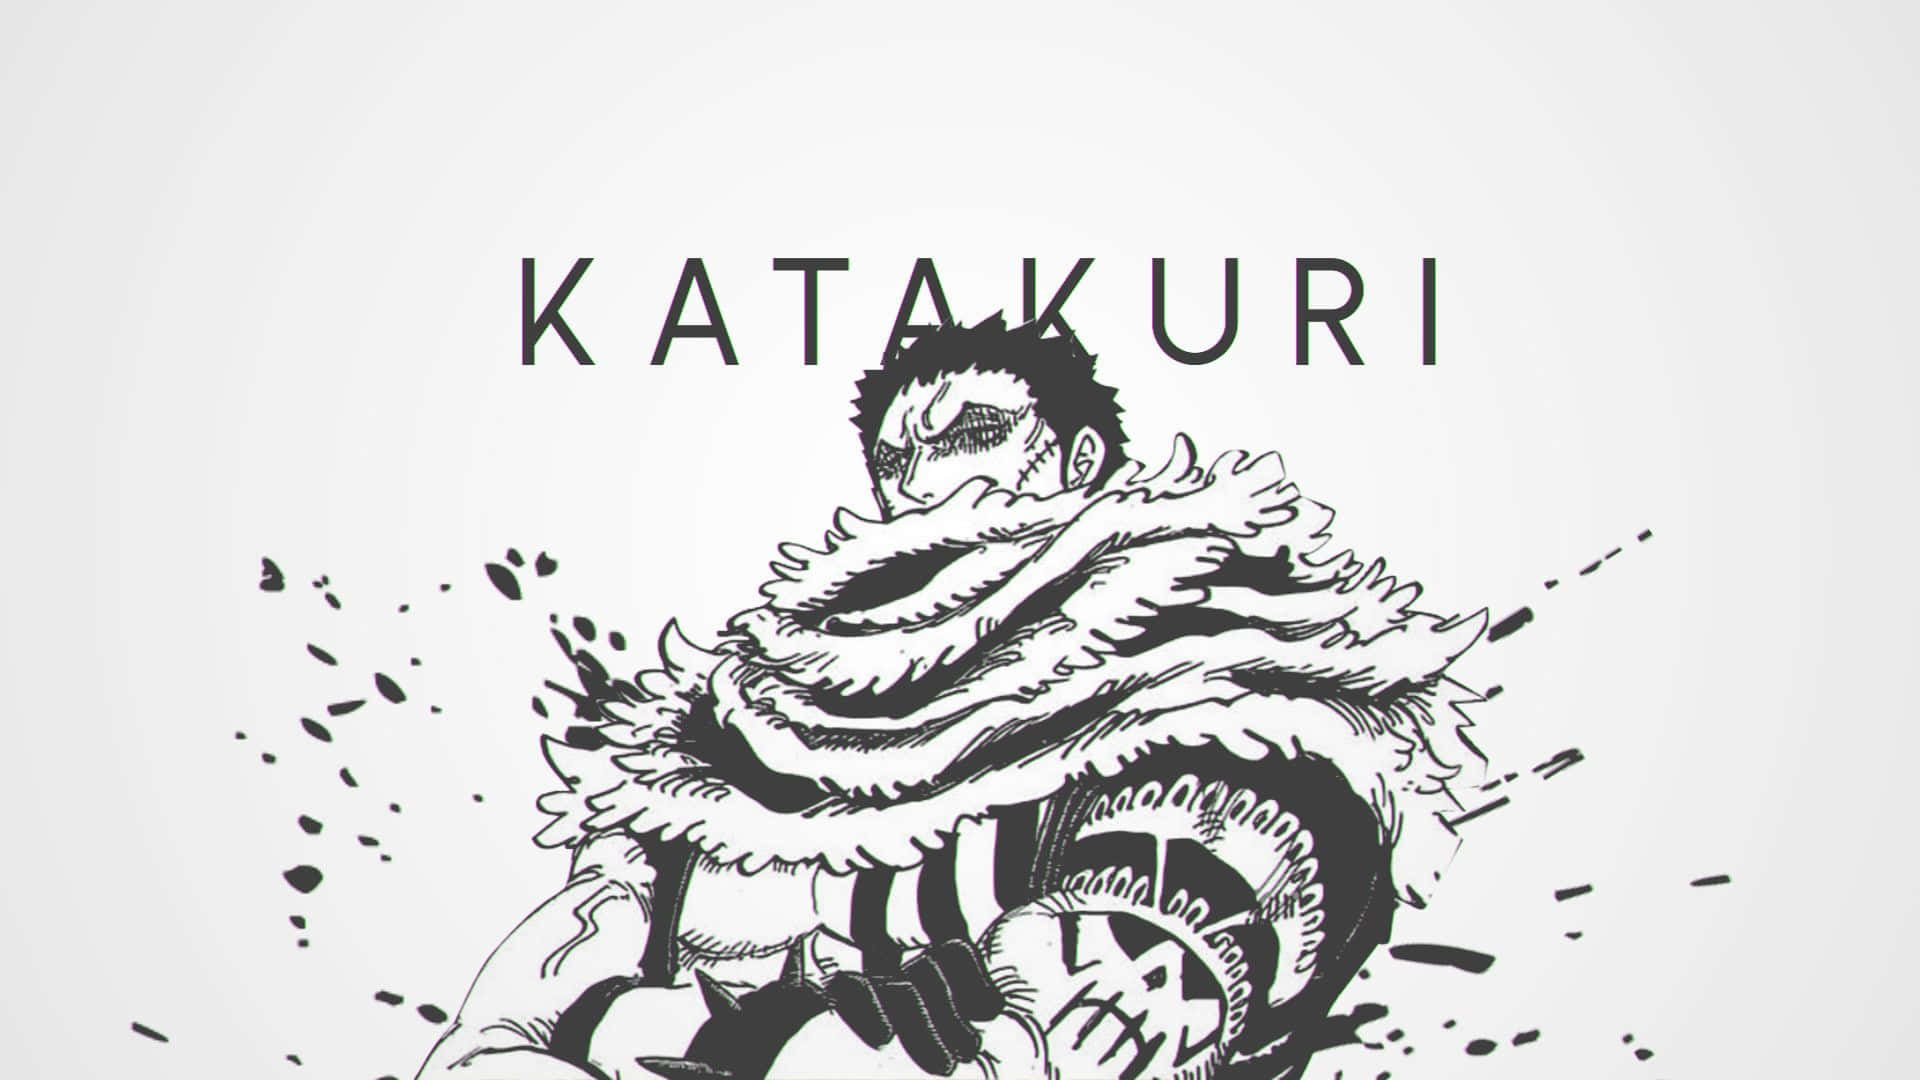 Charlotte Katakuri in Battle Stance Wallpaper